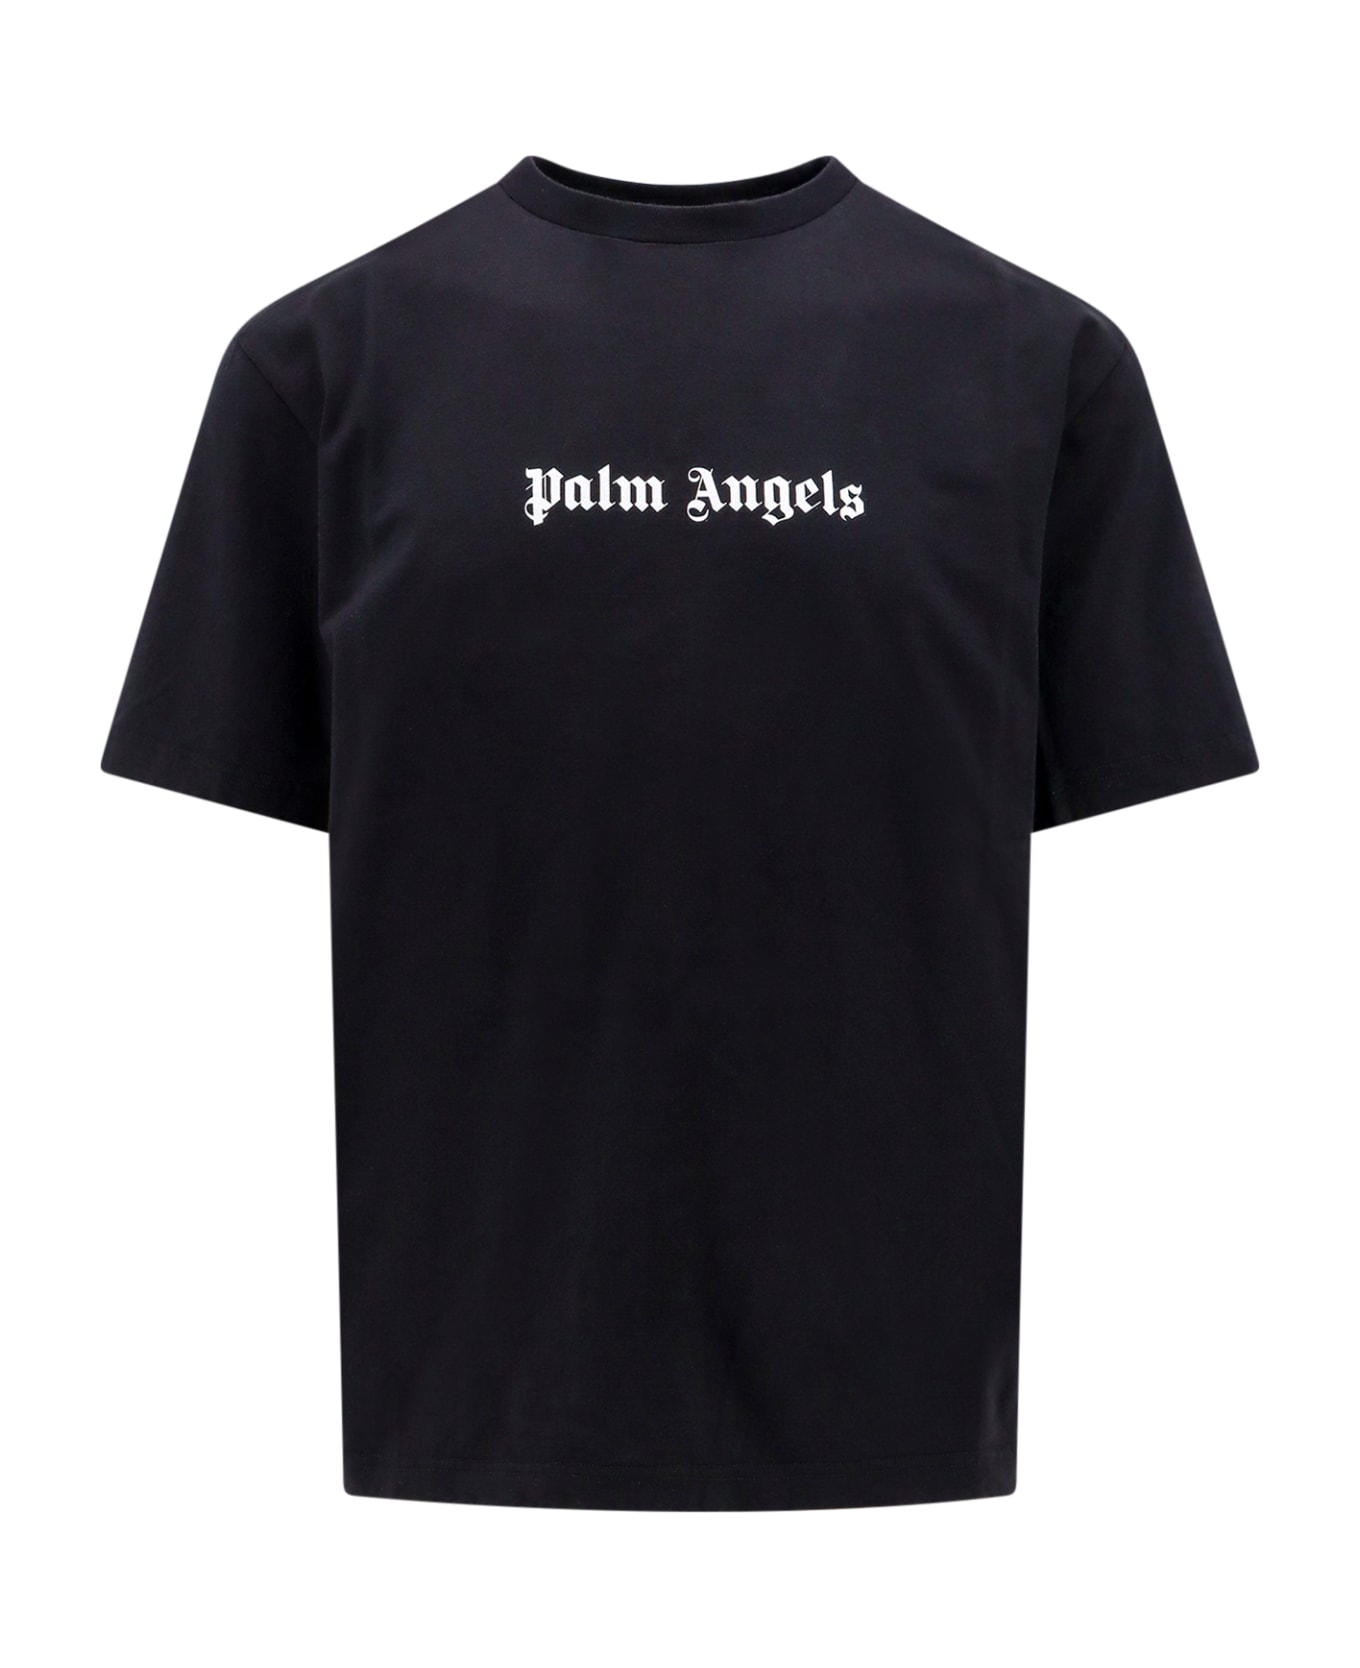 Palm Angels T-shirt - Black/white